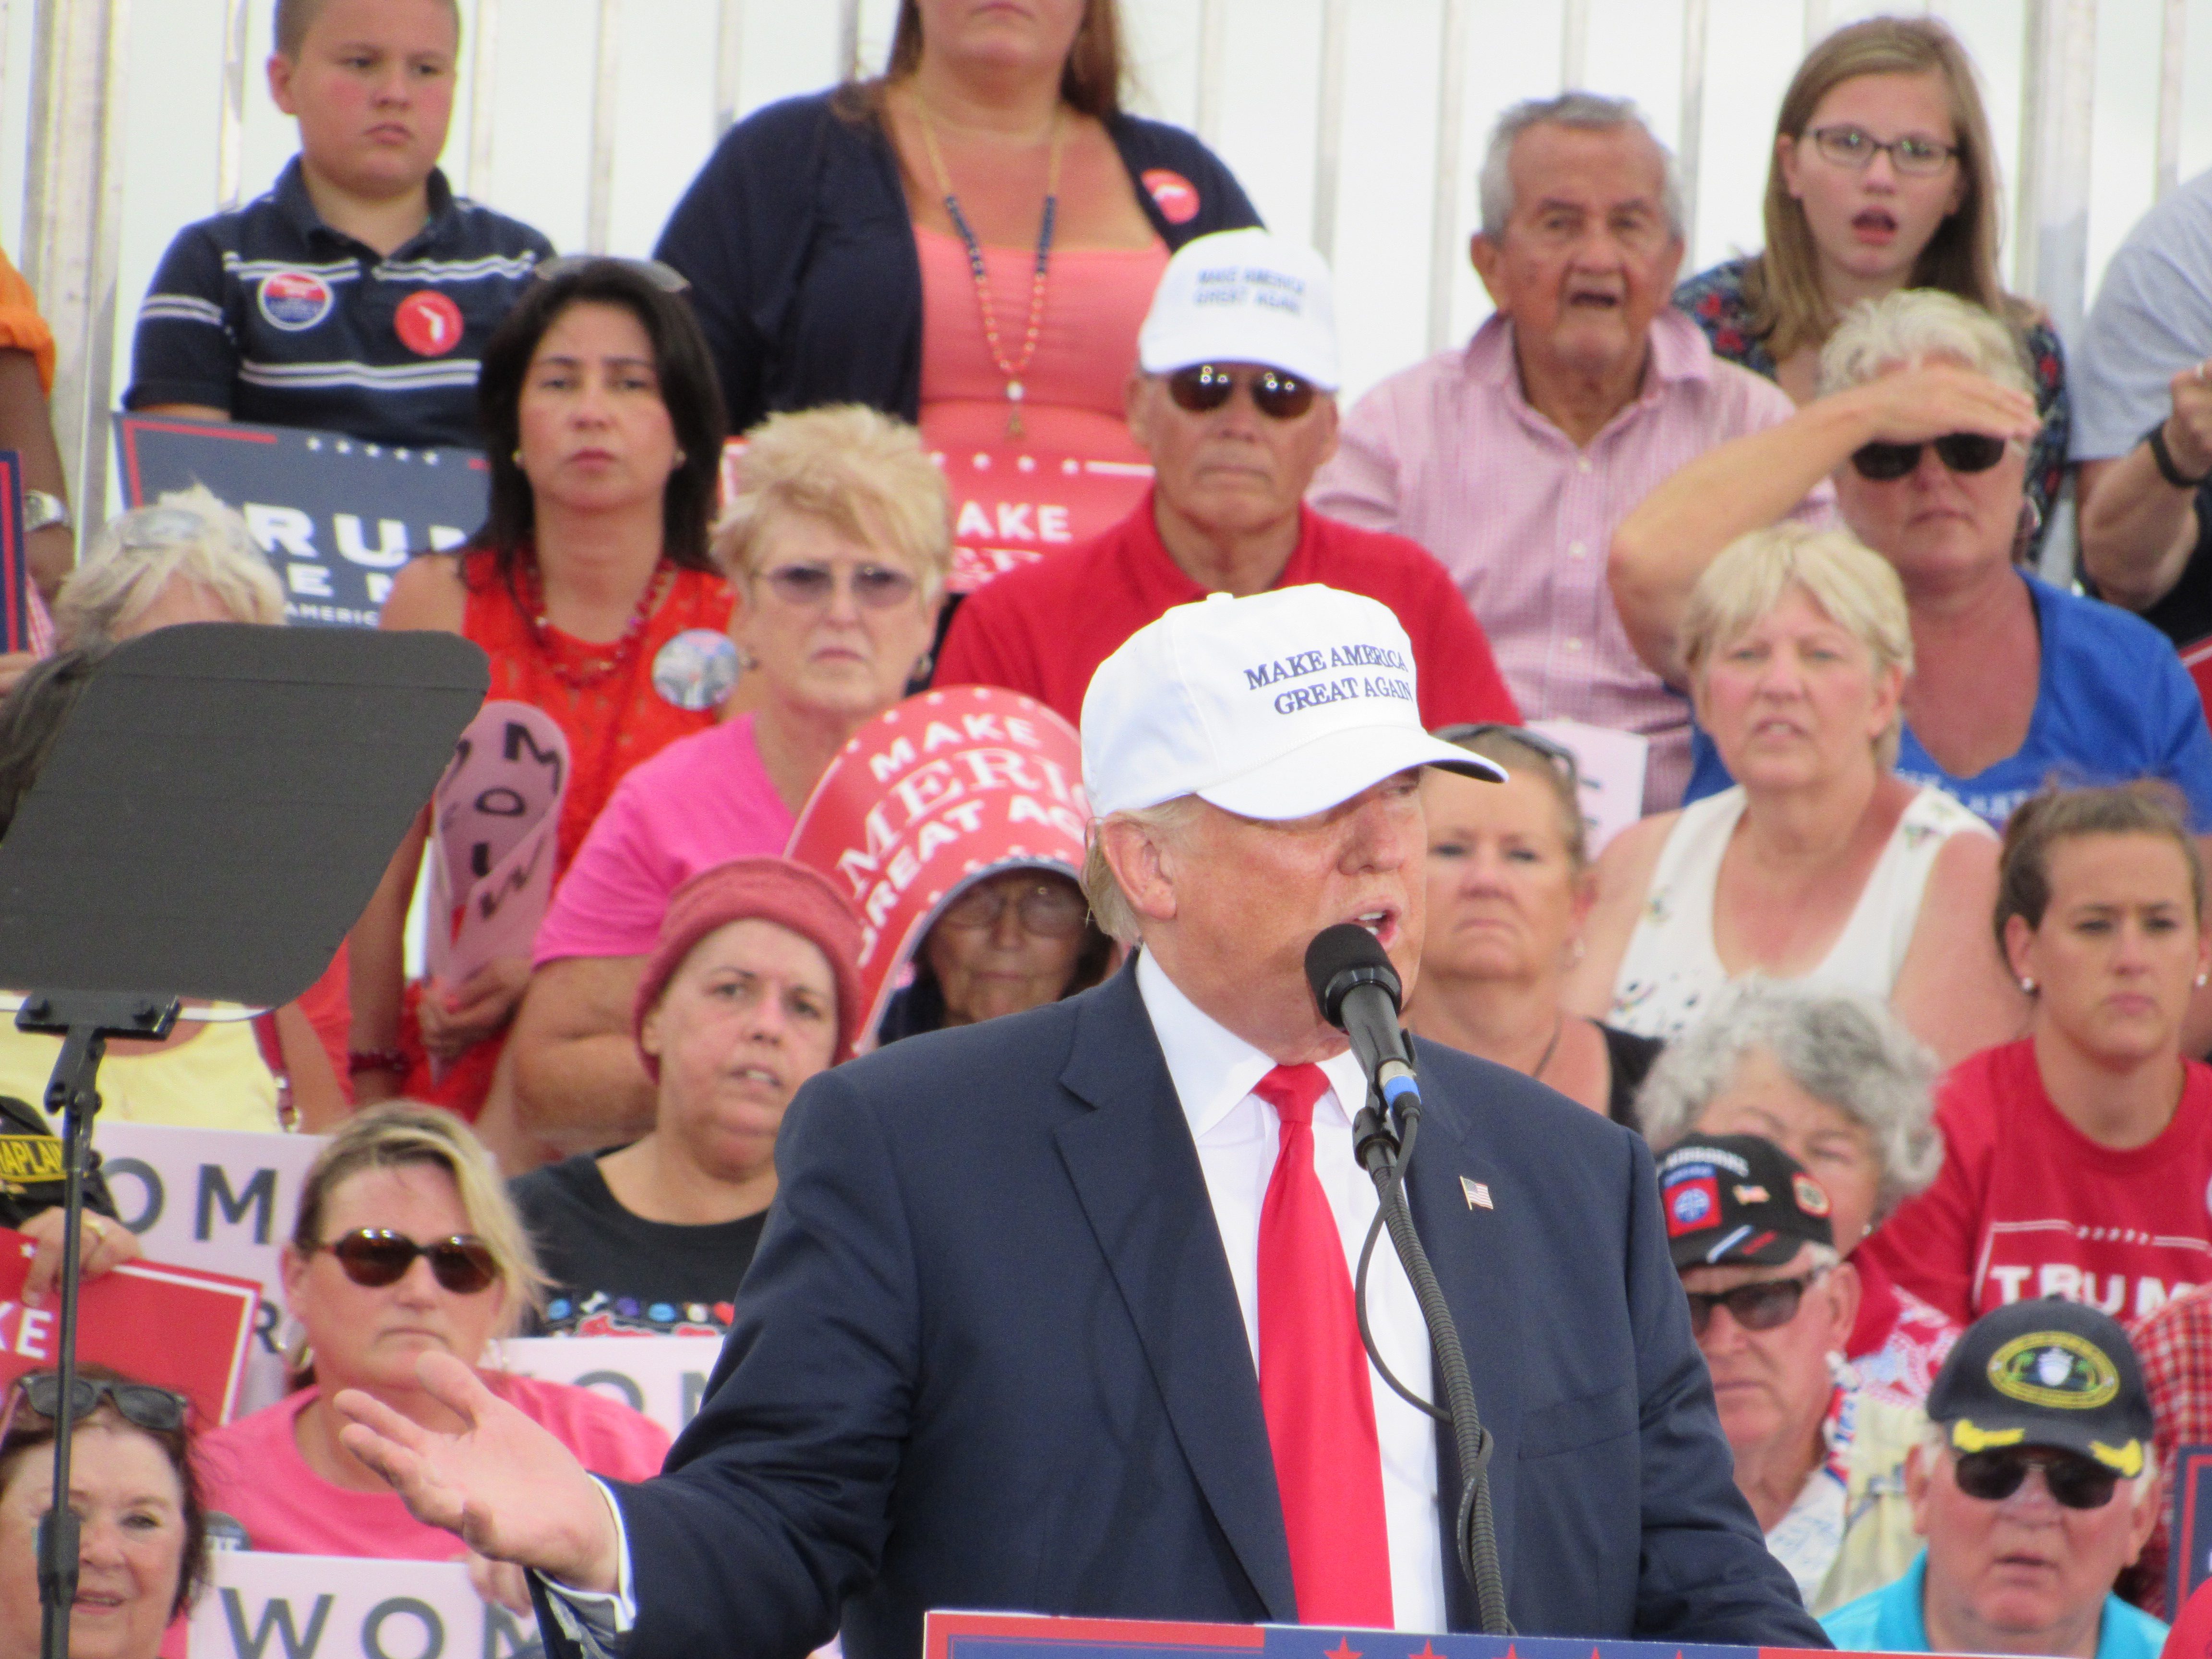 Trump speaks at Lakeland, FL rally Oct 12, 2016